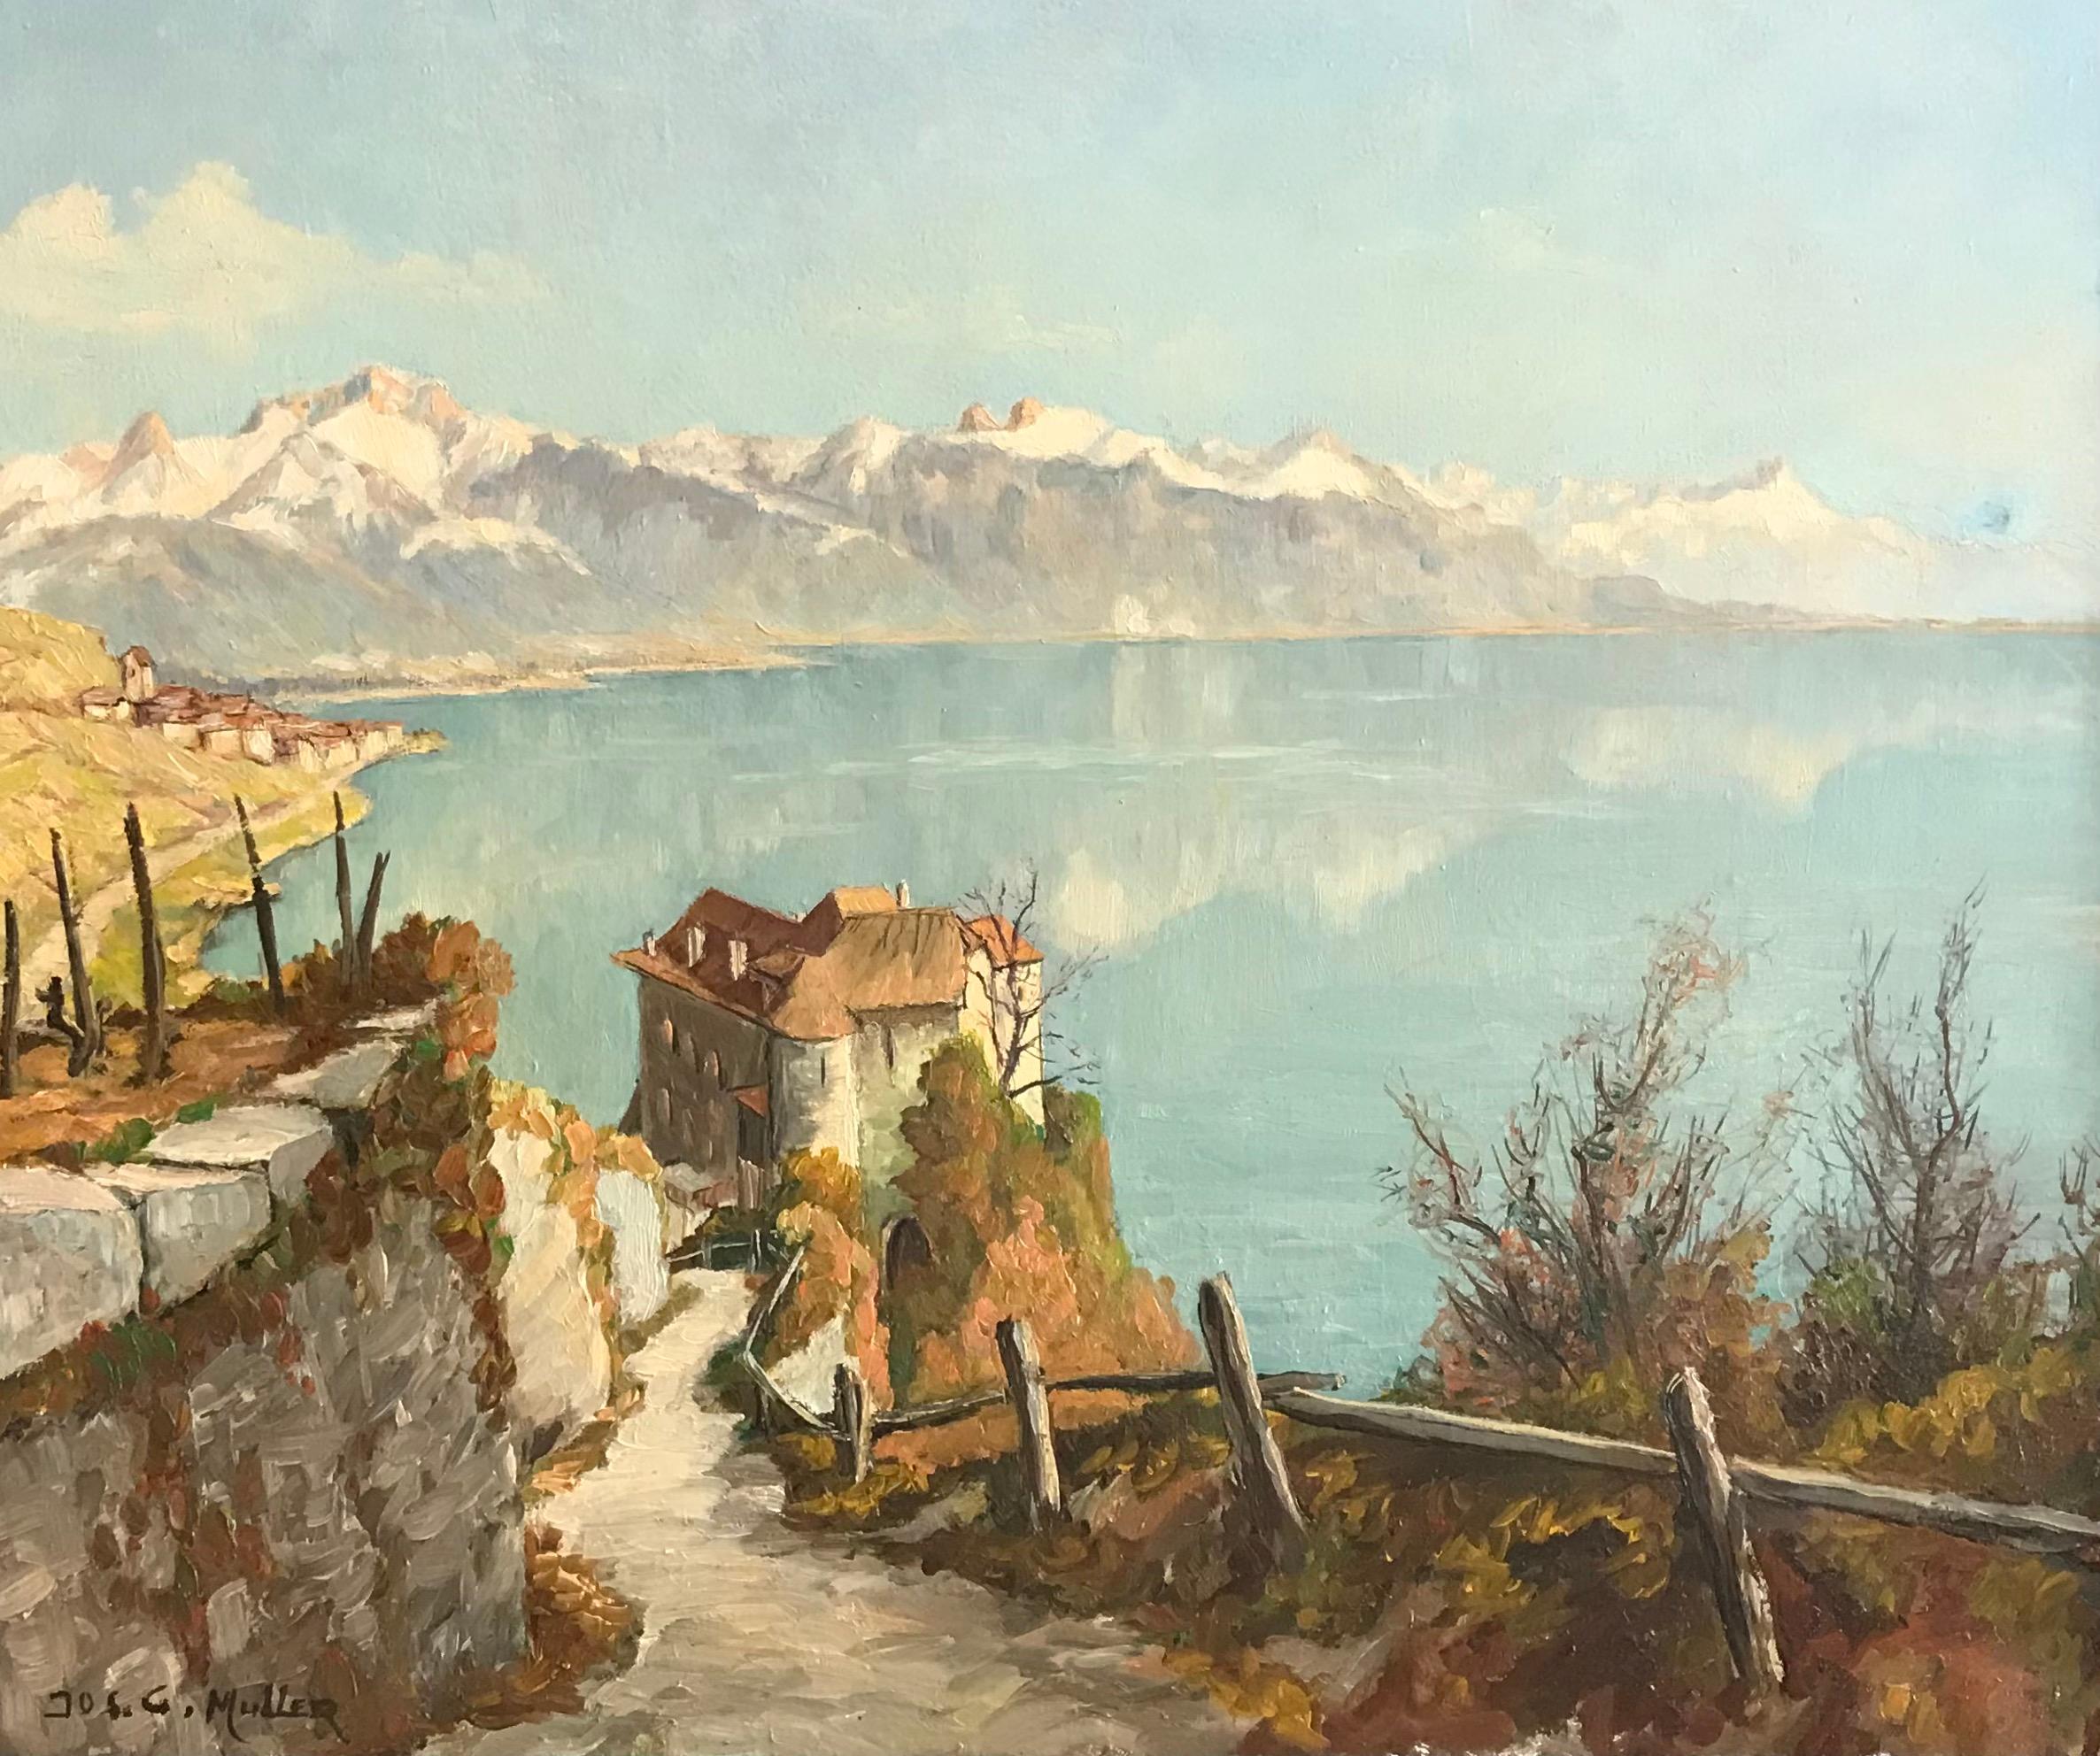 Castle view by Joseph Muller - Oil on canvas 65x54 cm